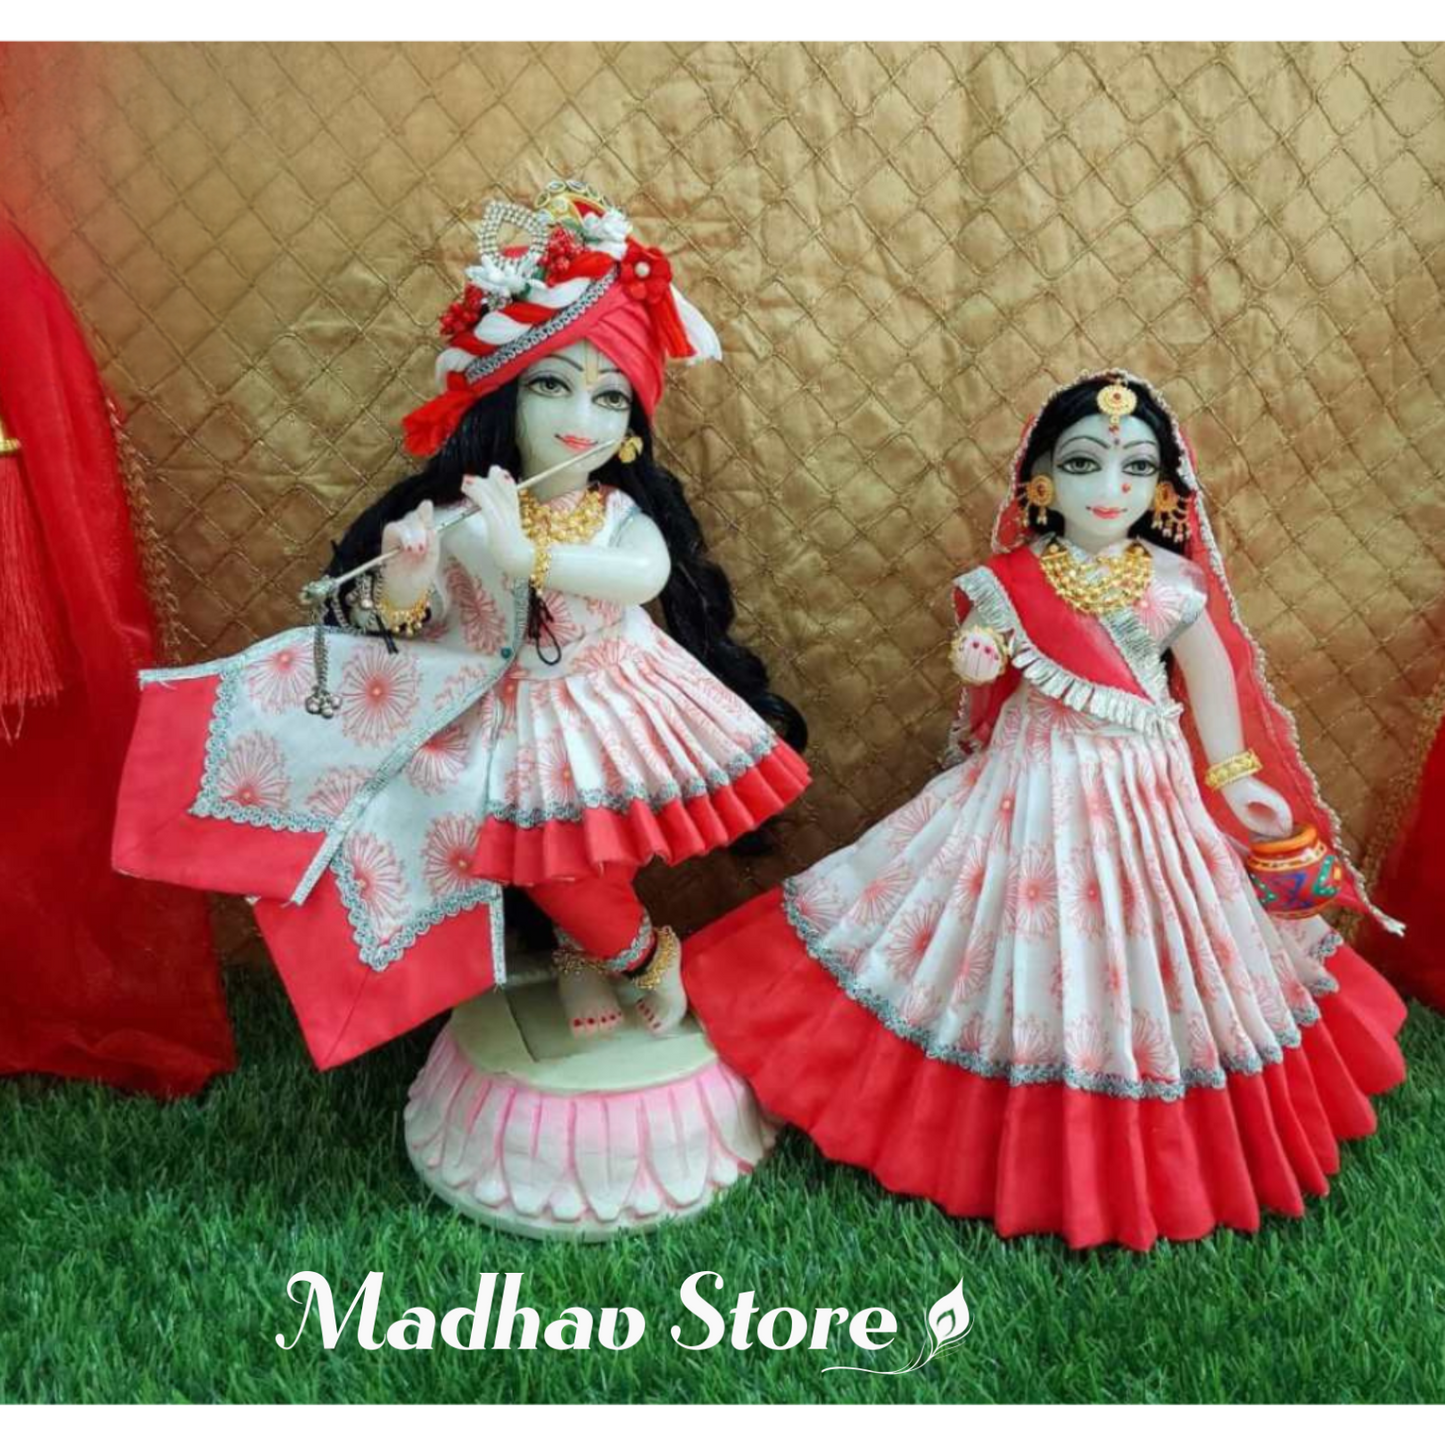 Red & White Dress for Radha Krishna